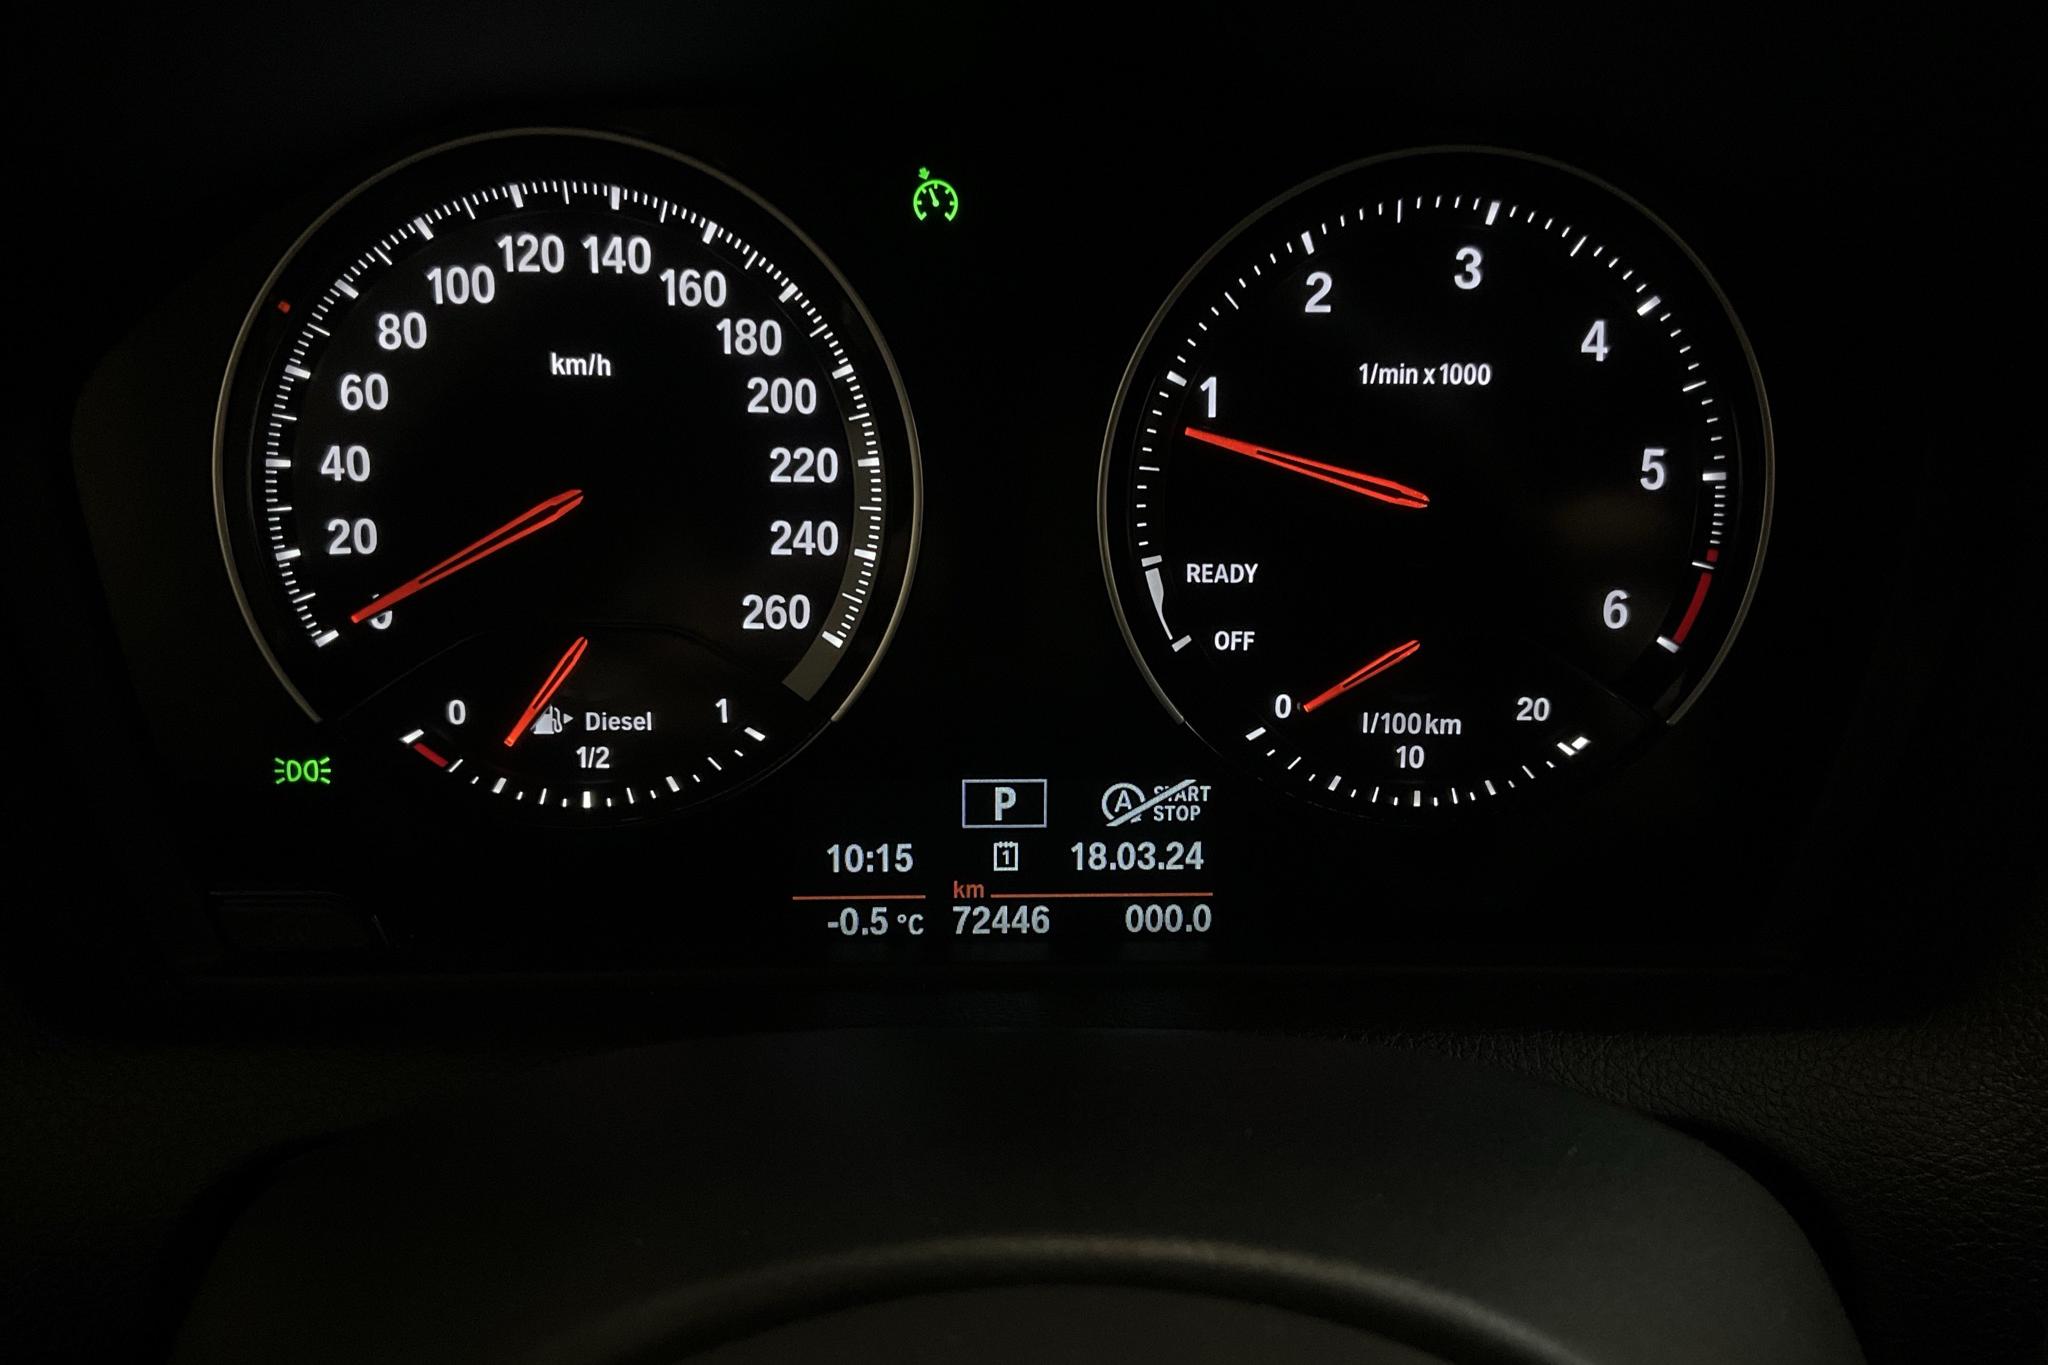 BMW 120d xDrive 5dr, F20 (190hk) - 72 440 km - Automaatne - valge - 2019